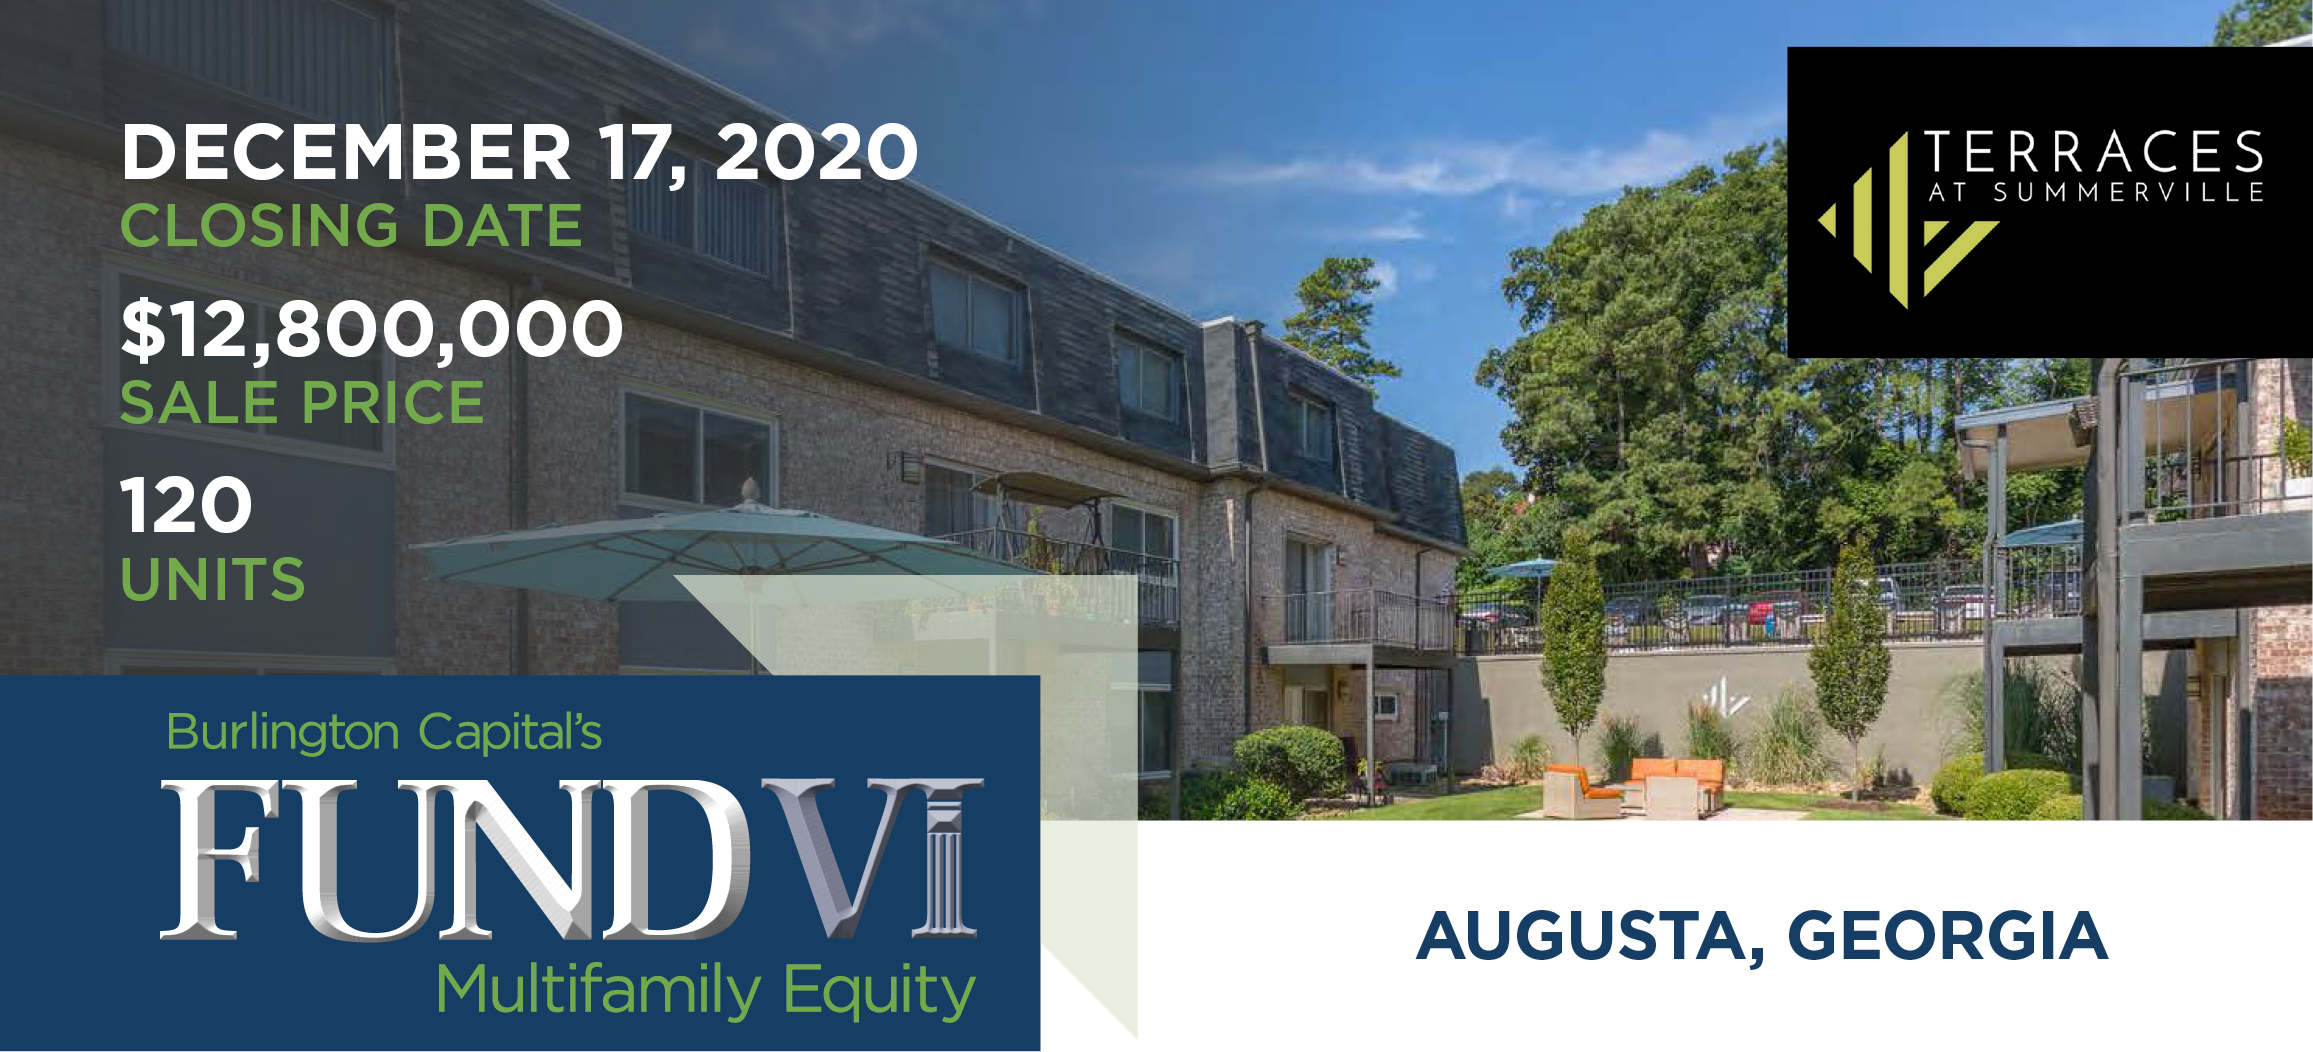 Announcing a Recent Property Acquisition to the Fund VI Portfolio in Augusta, Georgia